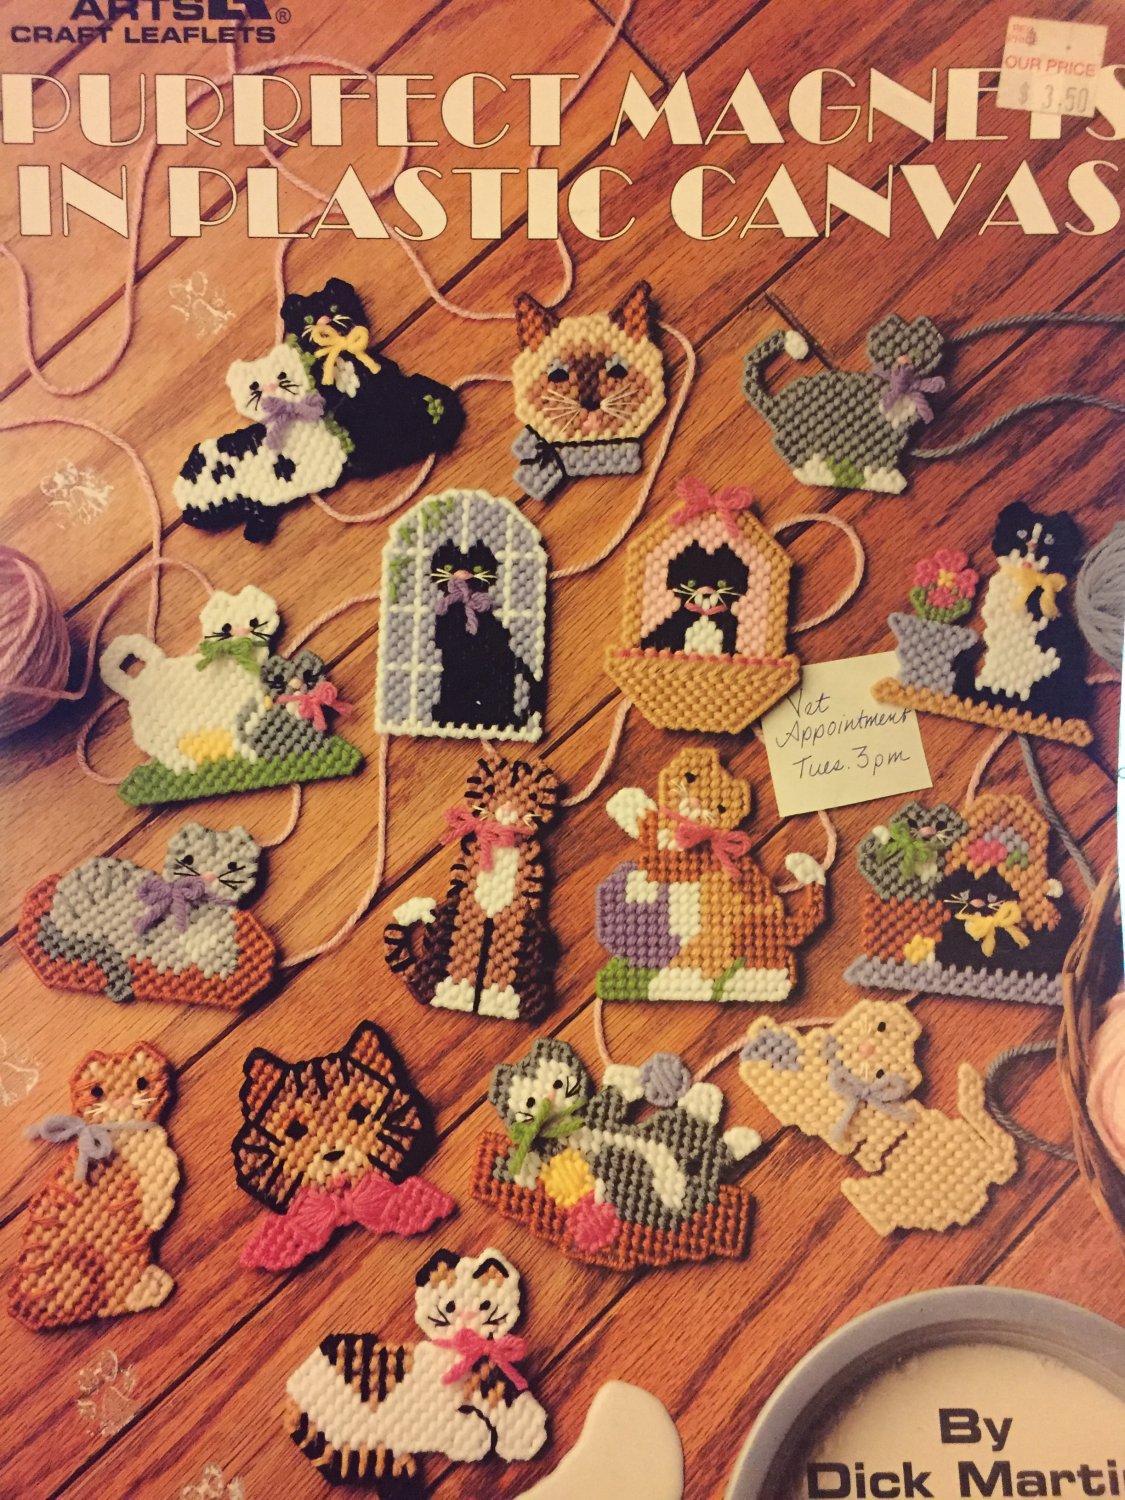 Cat Fridge Magnets Purrfect Magnets In Plastic Canvas Leaflet - Leisure Arts Leaflet #1577